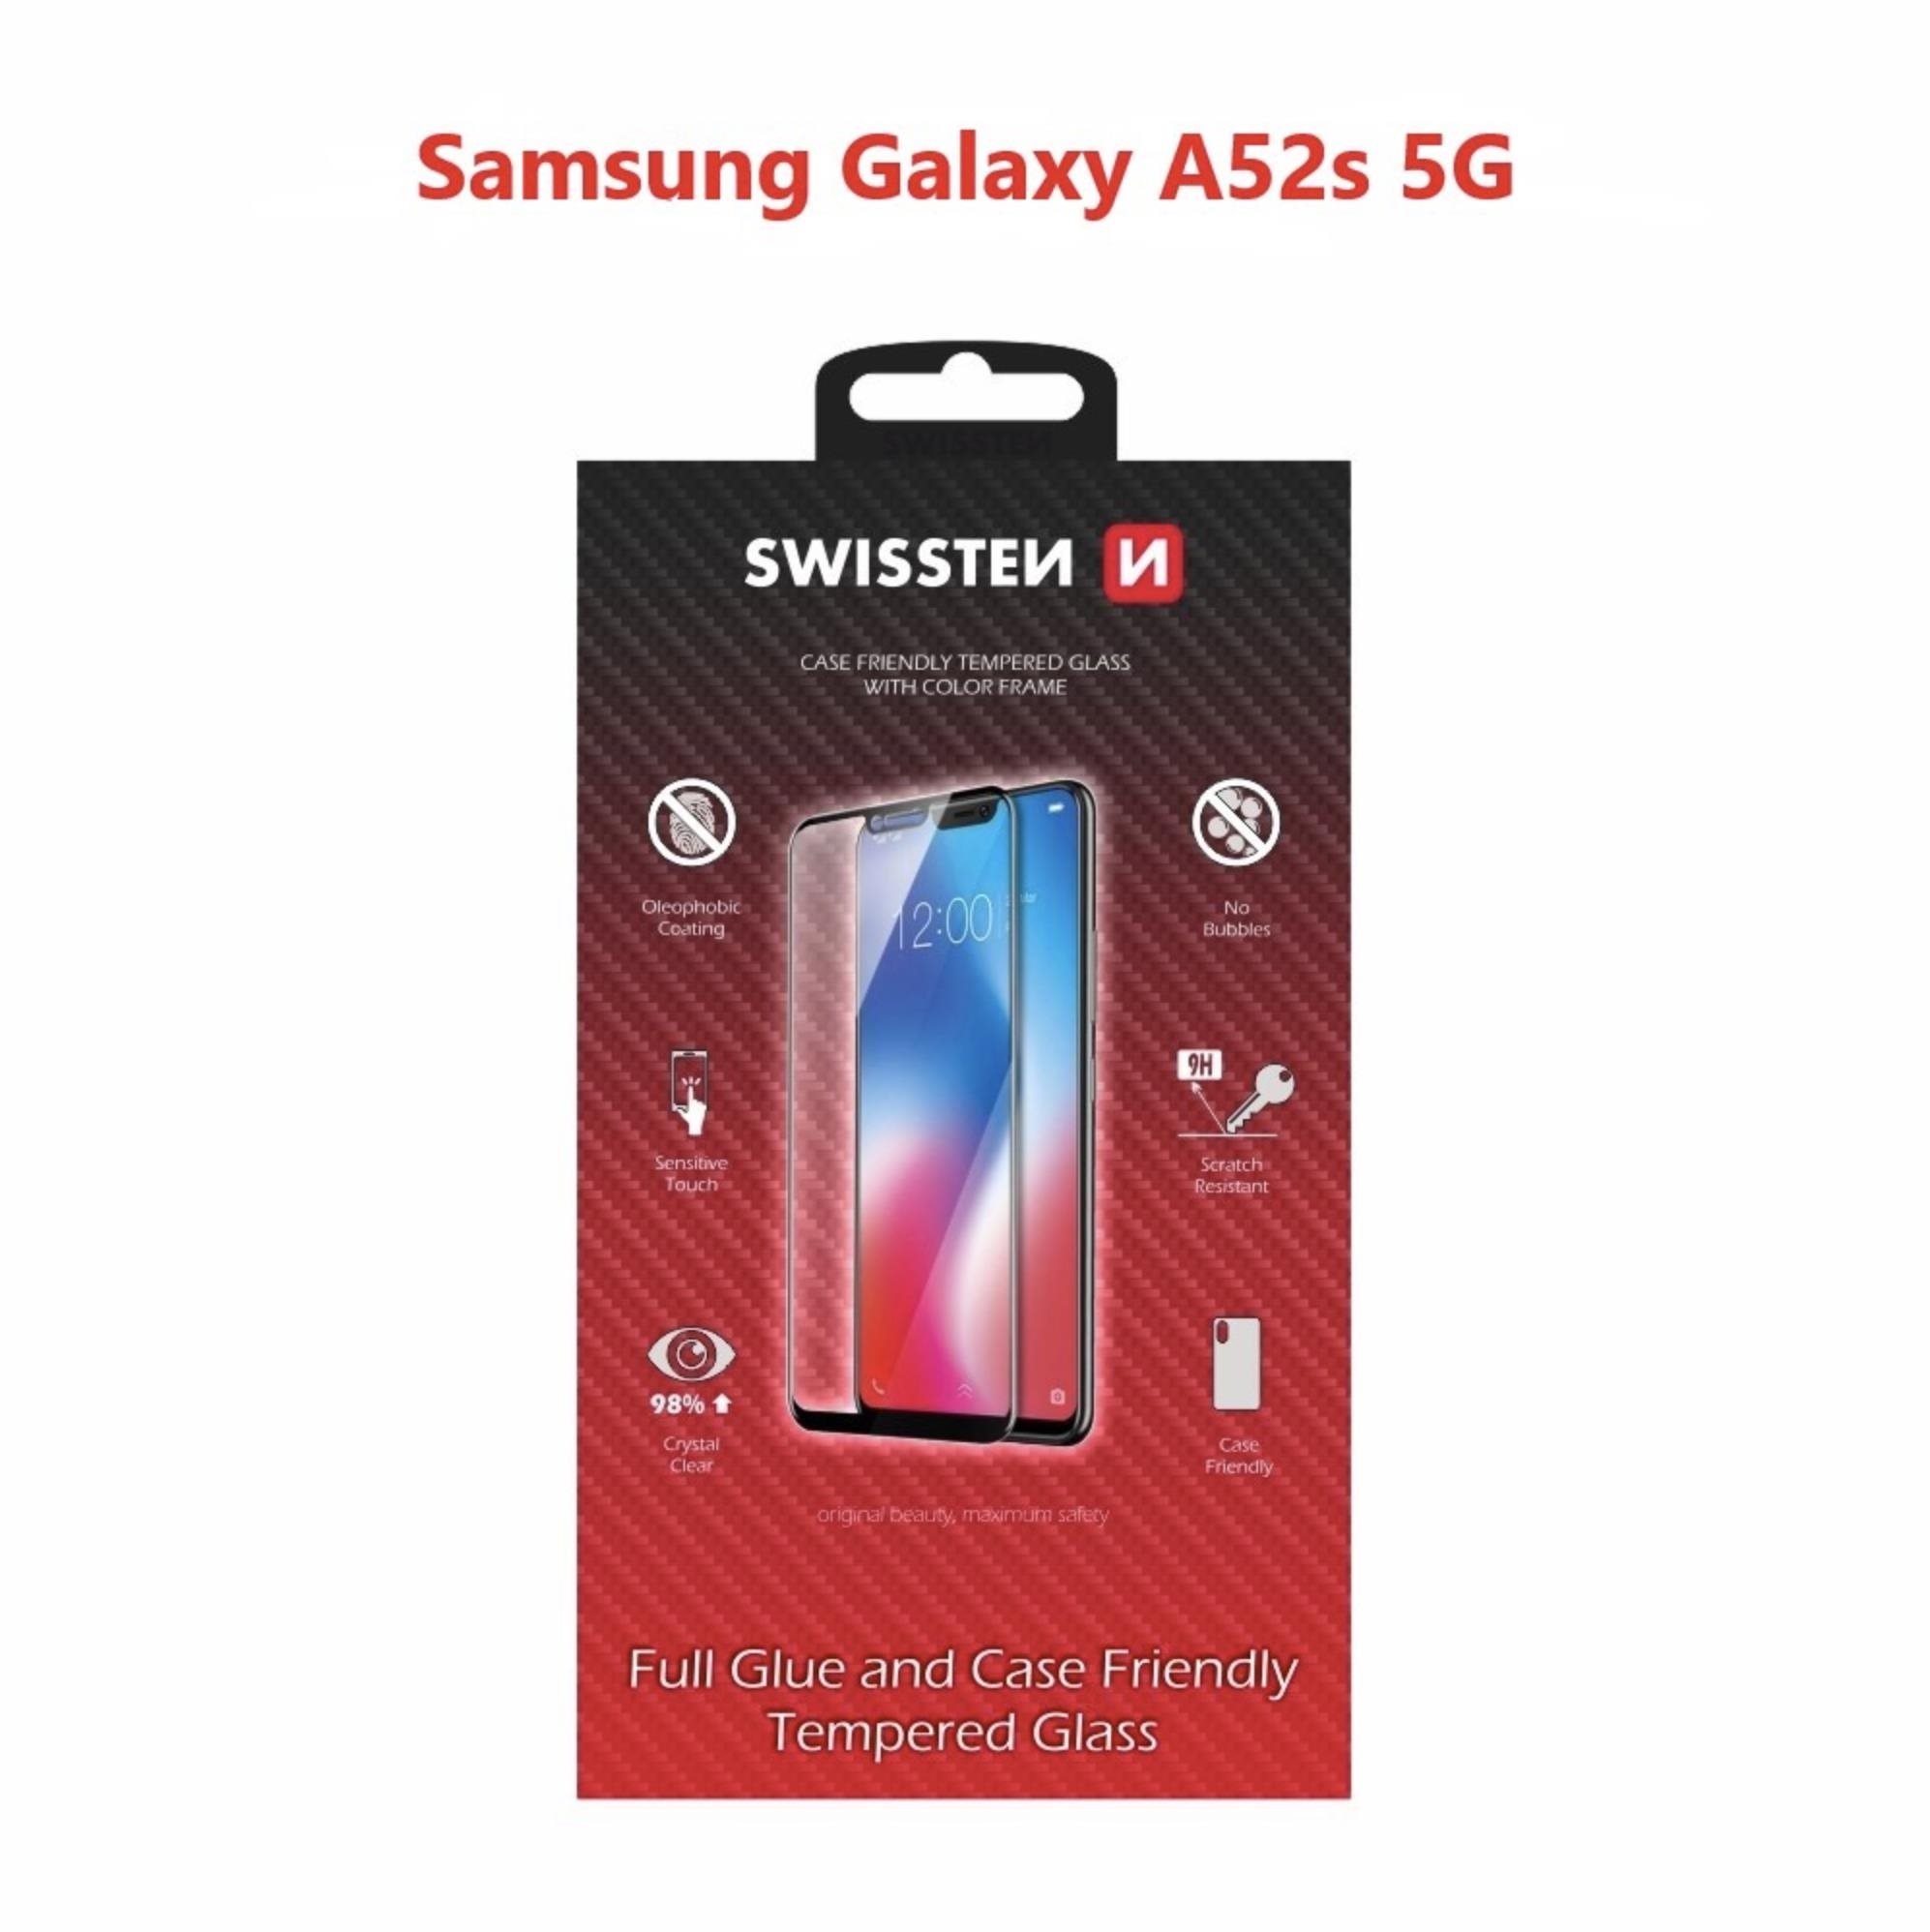 Swissten Case Friendly Samsung Galaxy A52s 5G üvegfólia - fekete